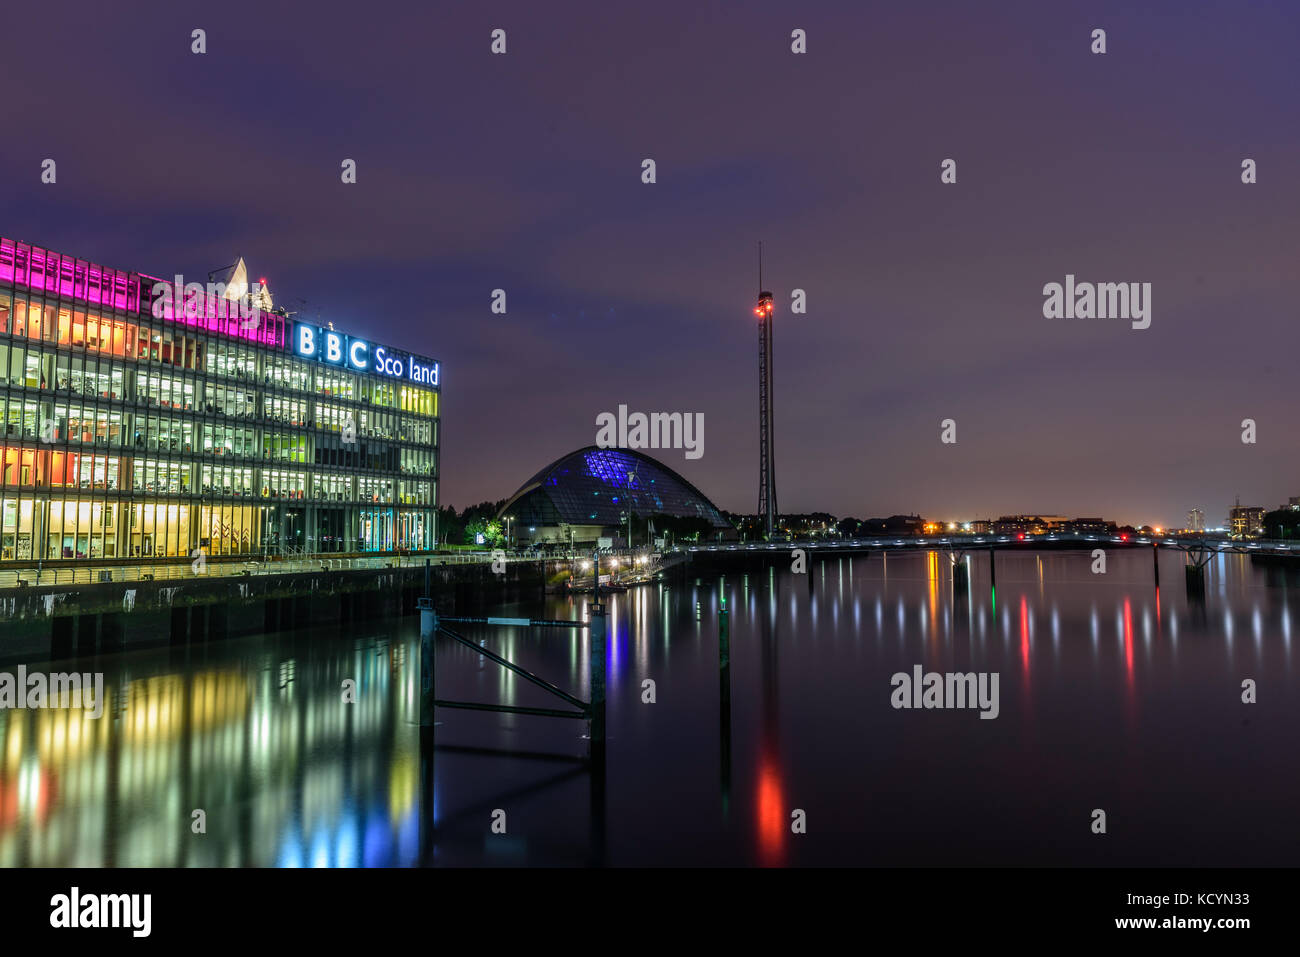 GLASGOW, SCOTLAND - AUGUST 15, 2017 - Night lights reflection in Glasgow City near the headquarters of BBC Scotland.. Stock Photo